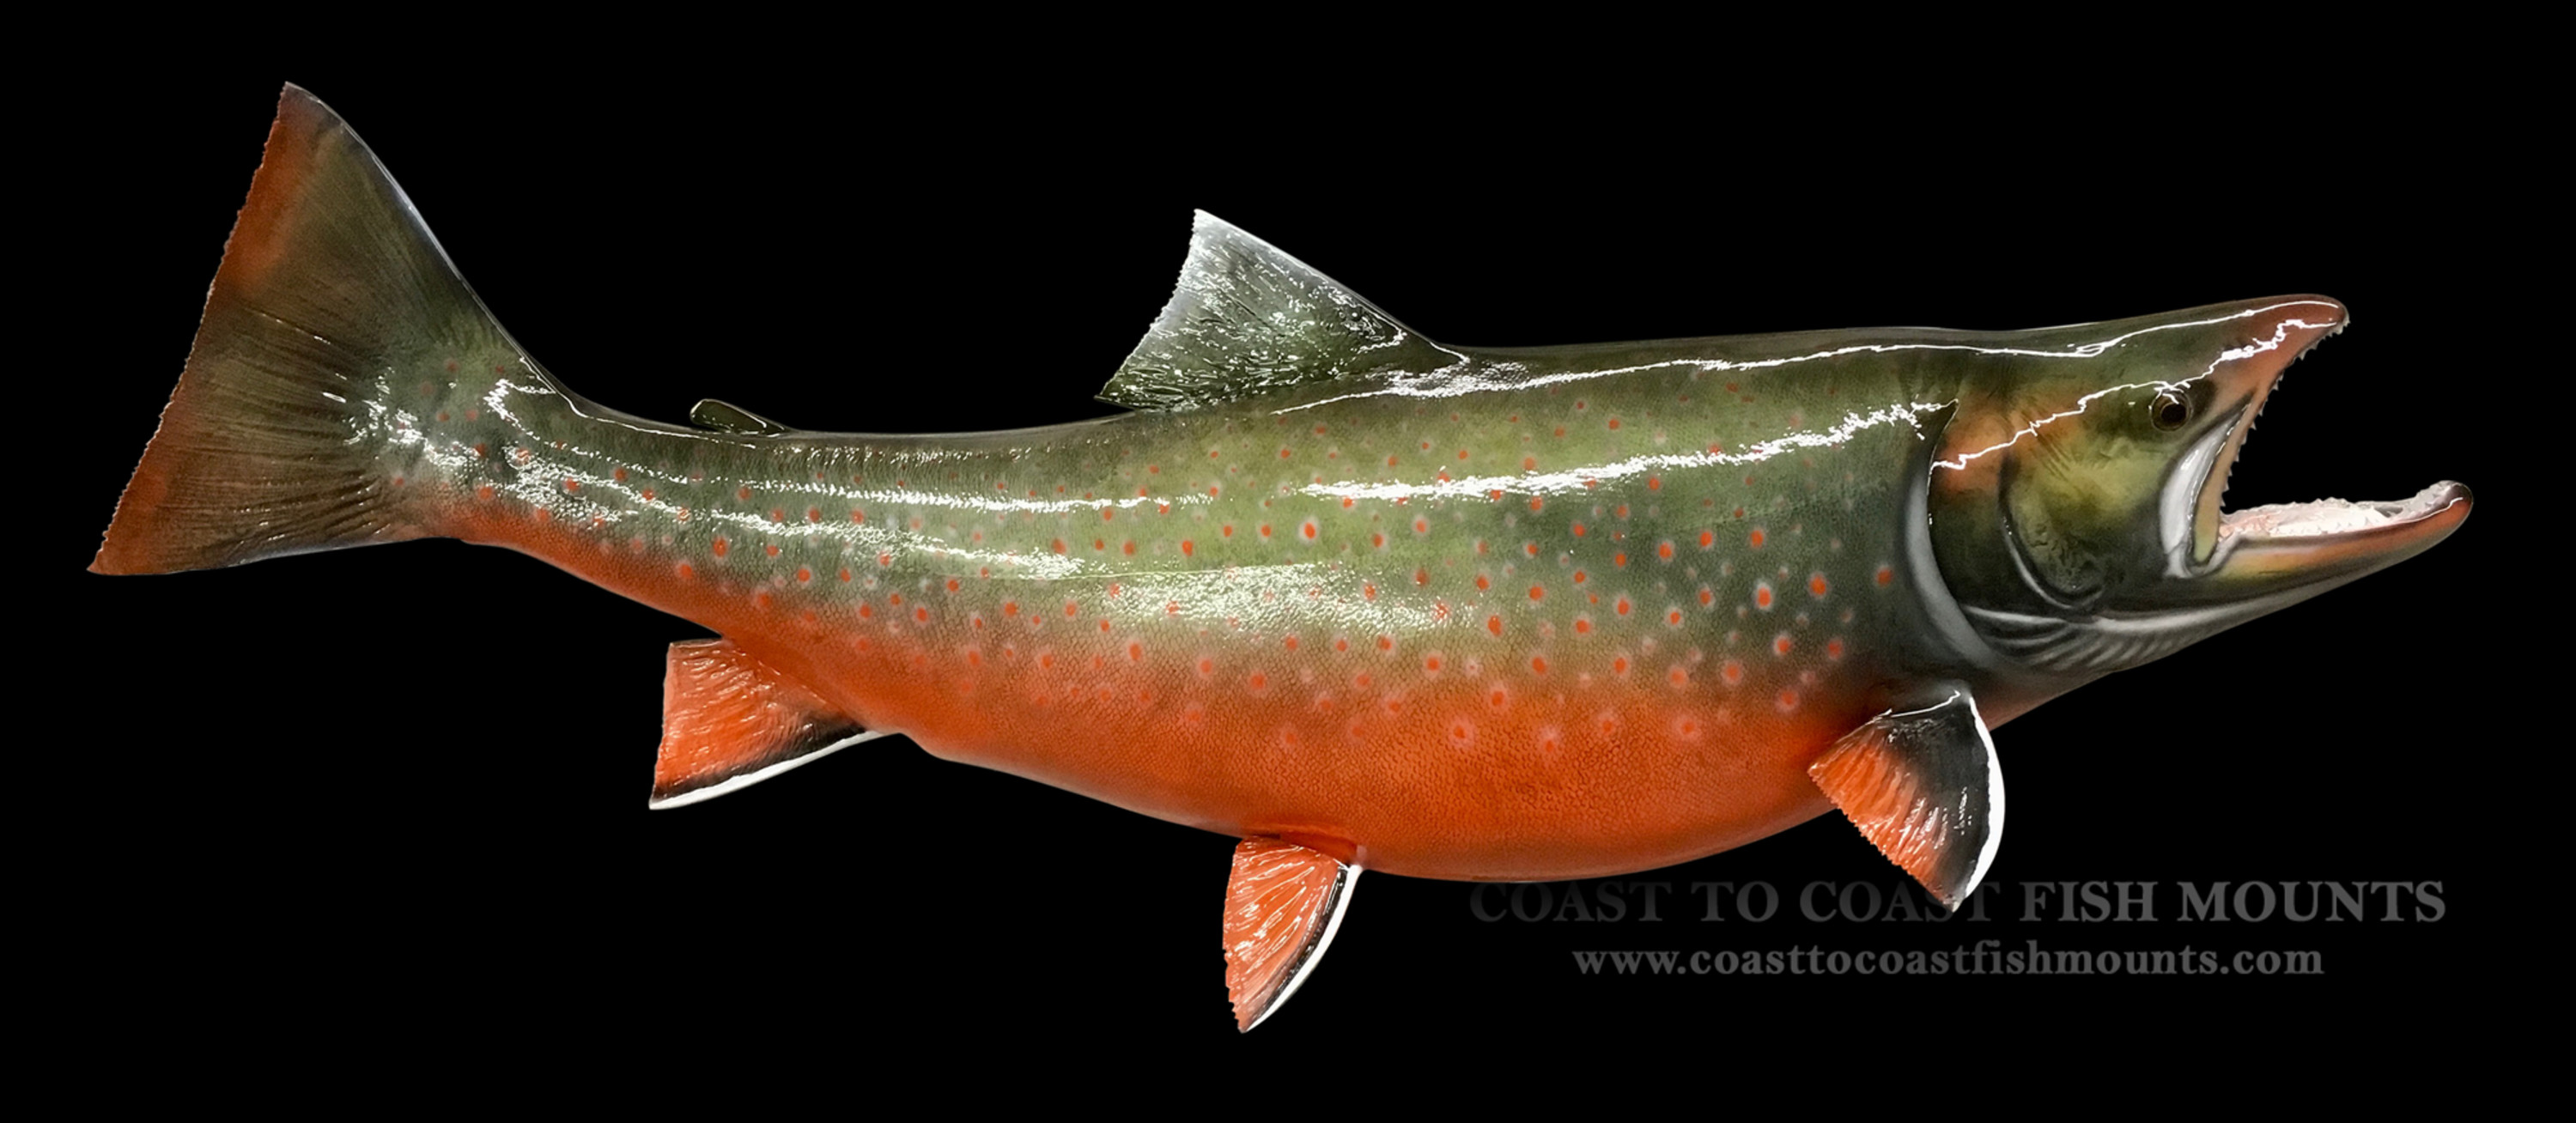 Arctic Char Fish Mounts & Replicas by Coast-to-Coast Fish Mounts